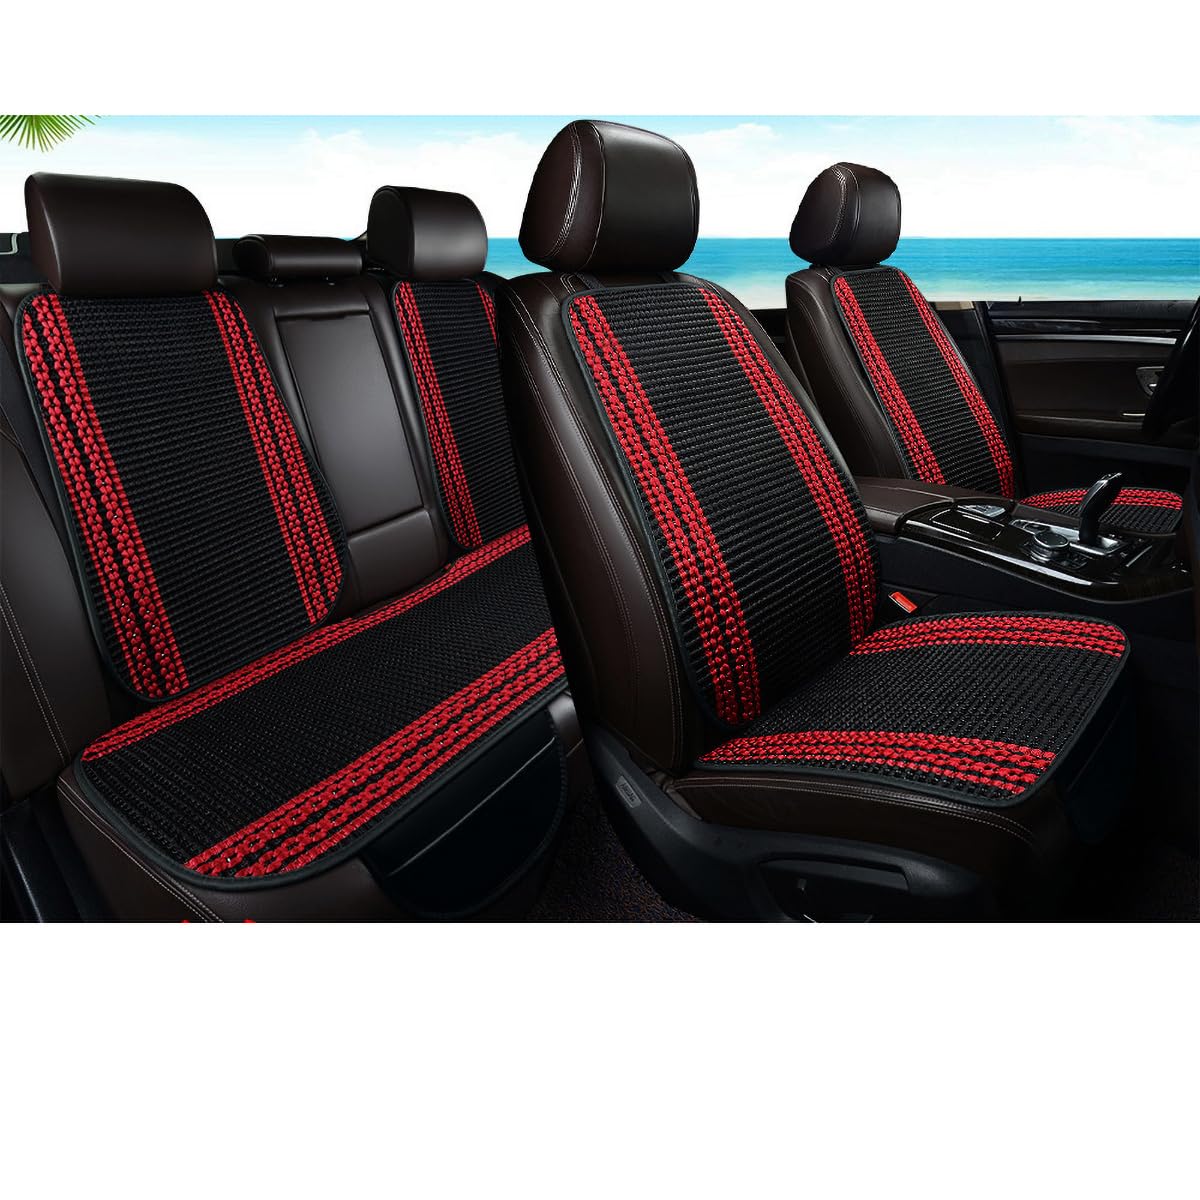 Belüfteter Autositzbezug den Sommer für Audi A4 2020-2023, Atmungsaktiv Und Bequem, Anti Rutsch Autositzschoner,A-black-7PCS von ASNAT